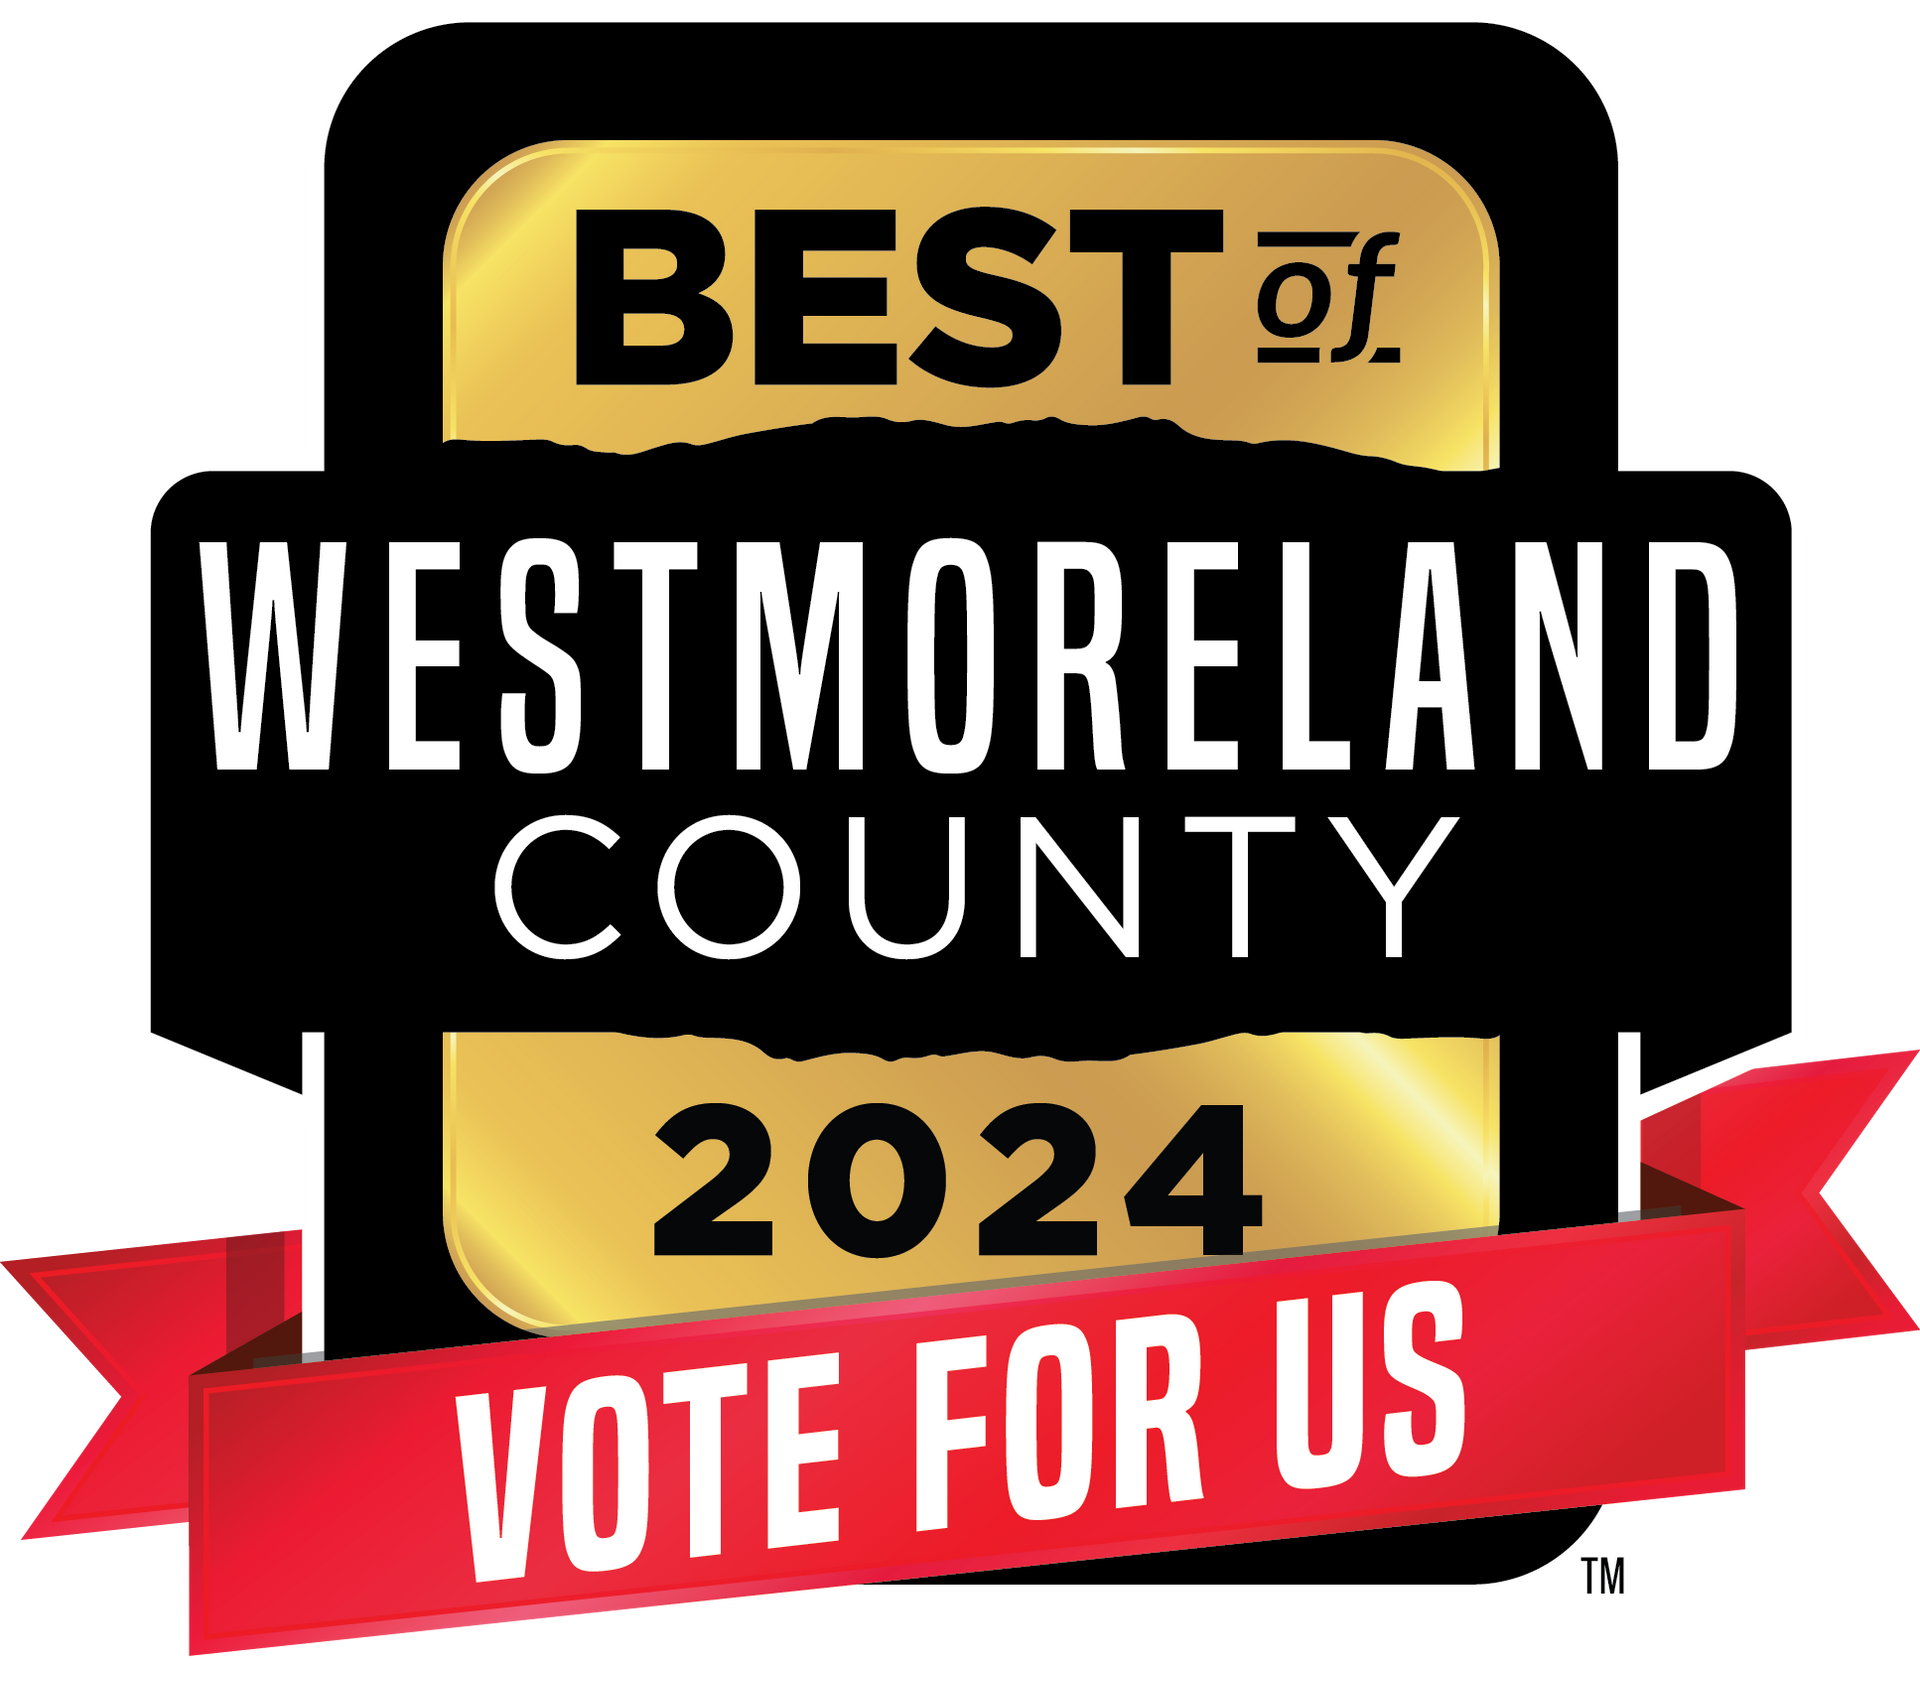 Best of West Moreland County 2024 logo